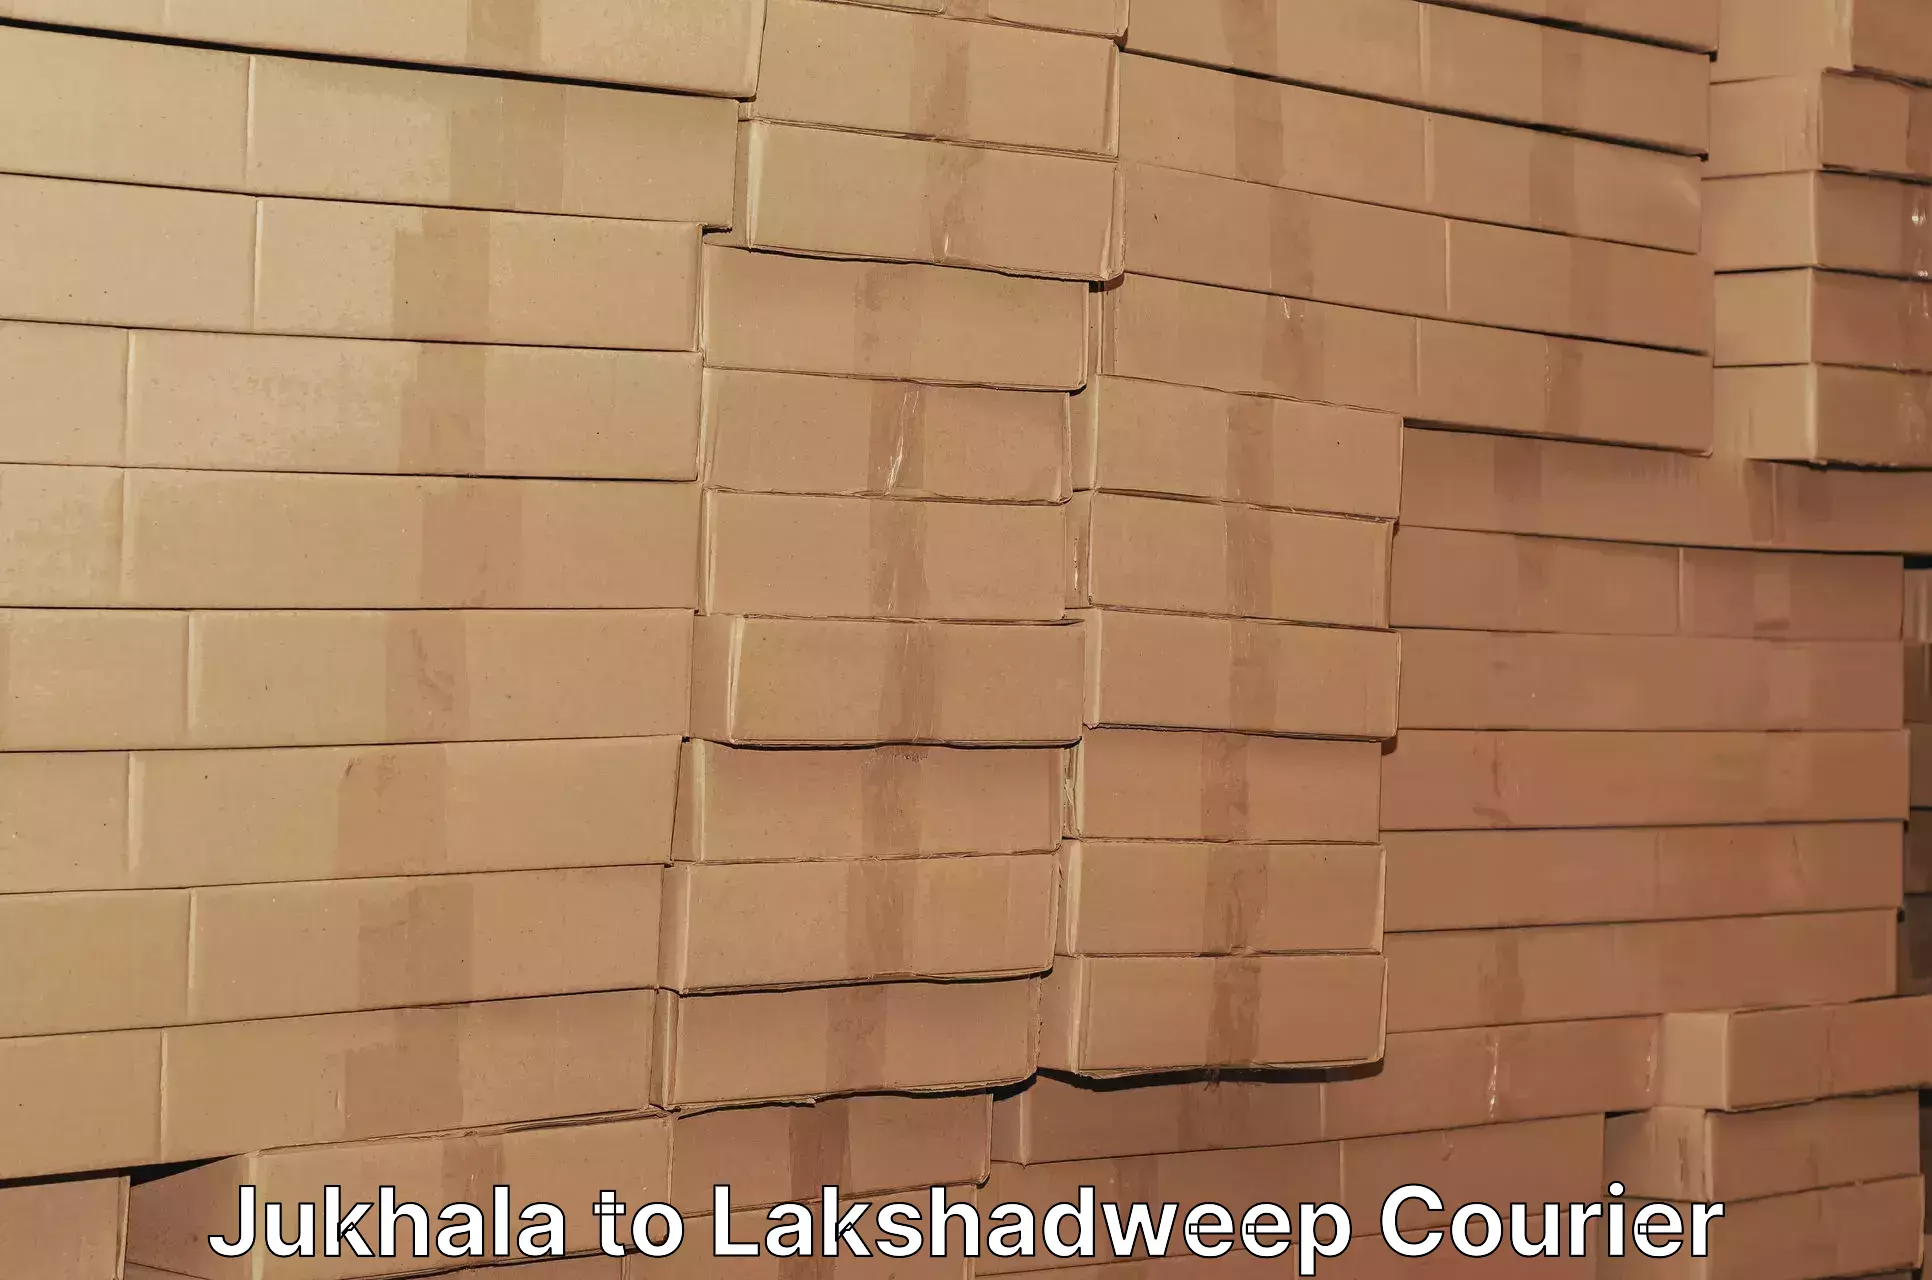 High-performance logistics Jukhala to Lakshadweep